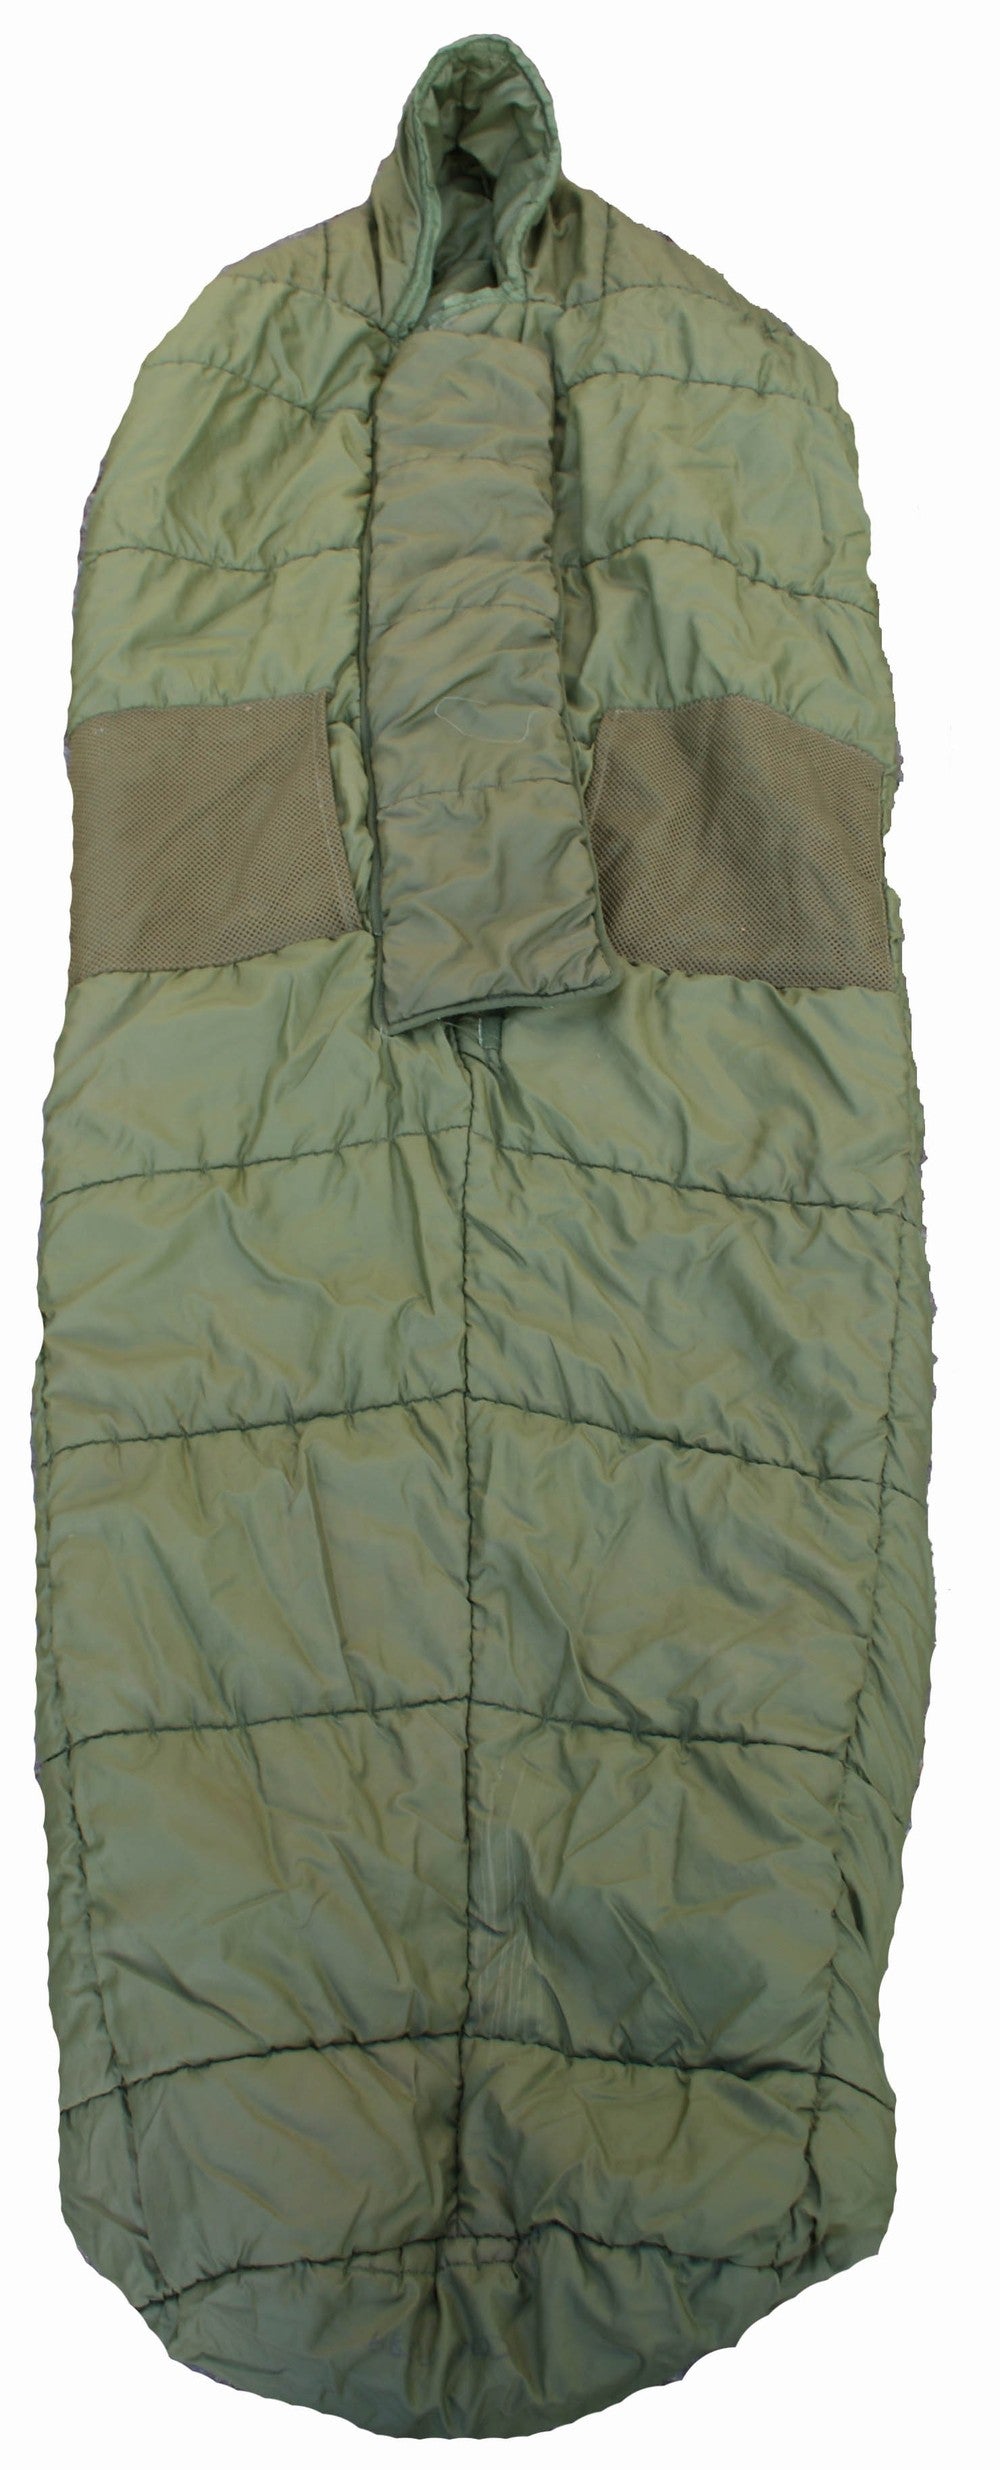 British Army Cold Weather 90 Pattern Sleeping bag